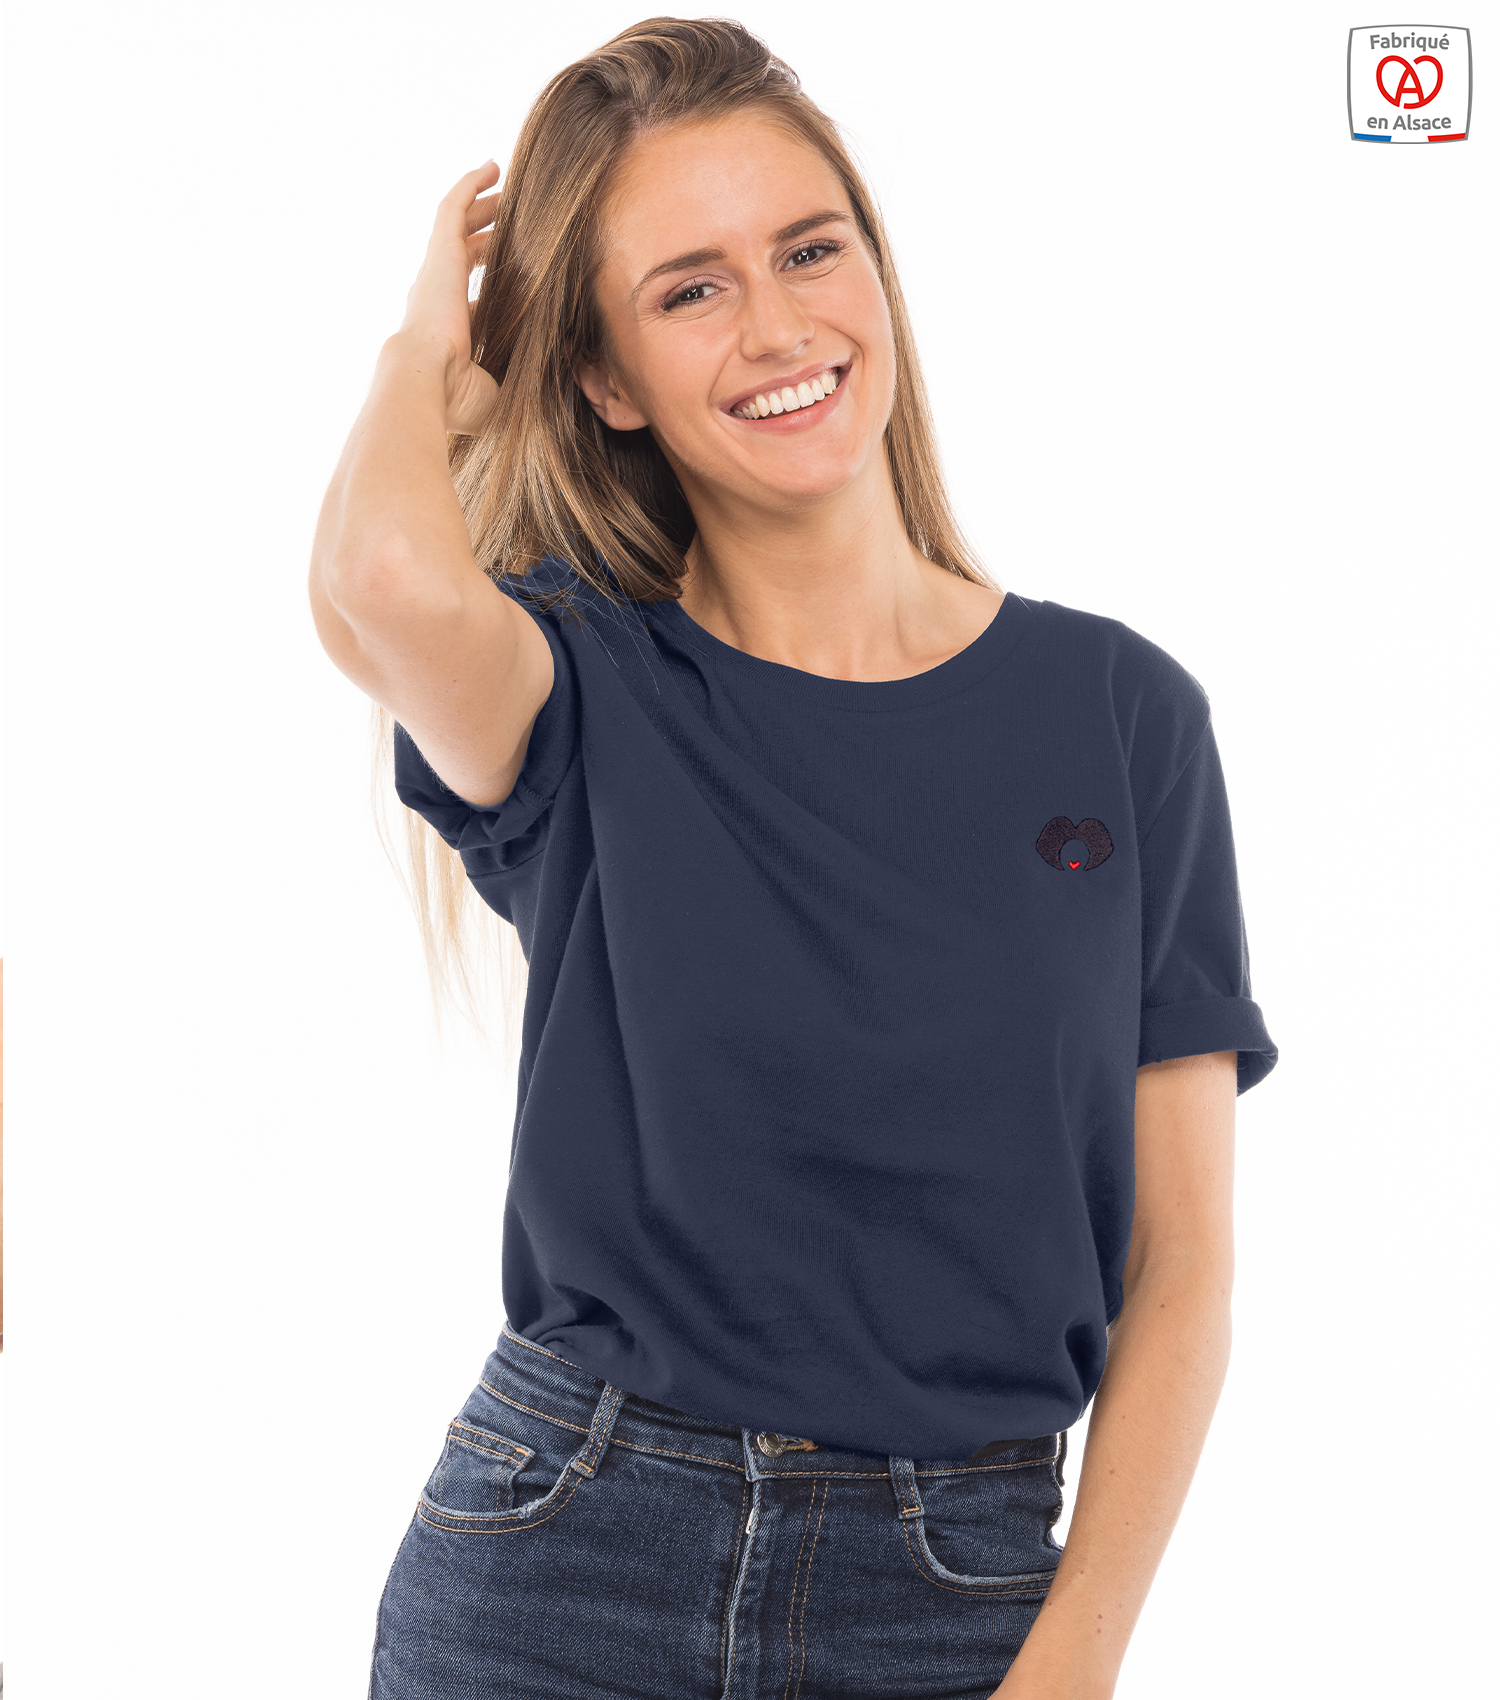 theim-t-shirt-made-in-france-mixte-bleu-marine-alsacienne-femme-1500-x-1700-px